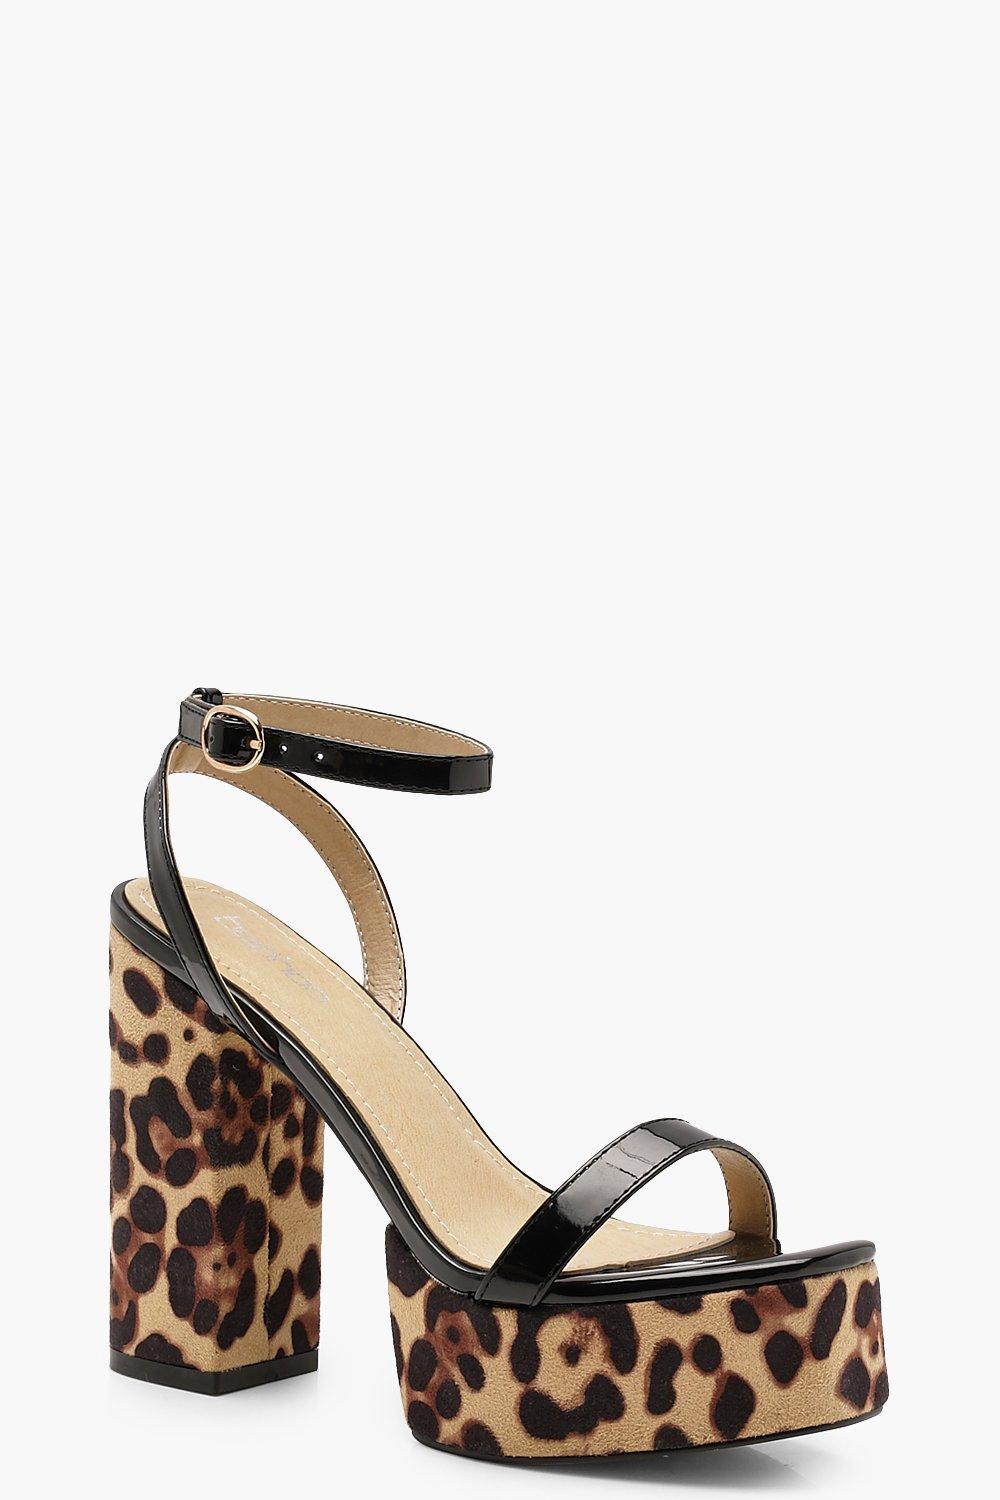 leopard print shoes boohoo